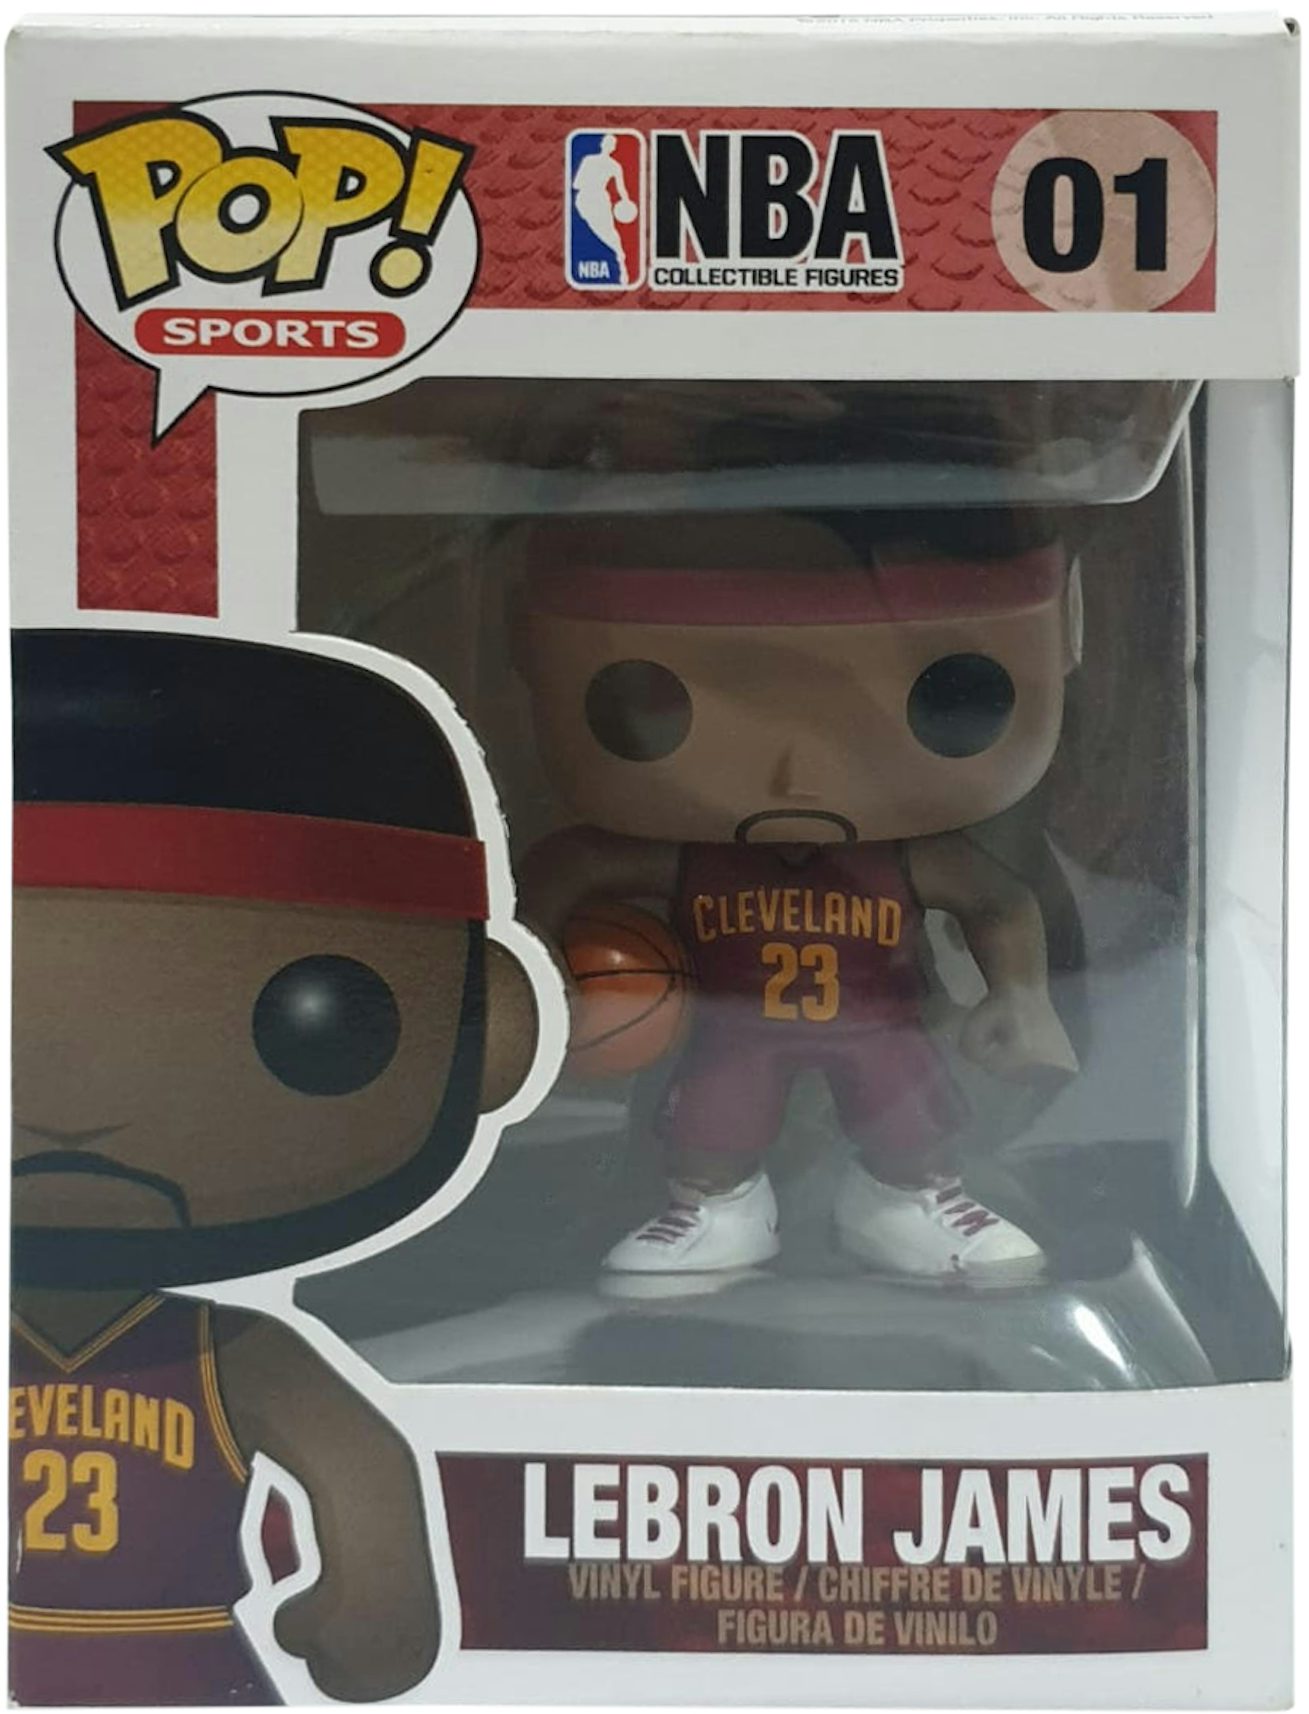 Funko Pop! NBA: Lakers - LeBron James